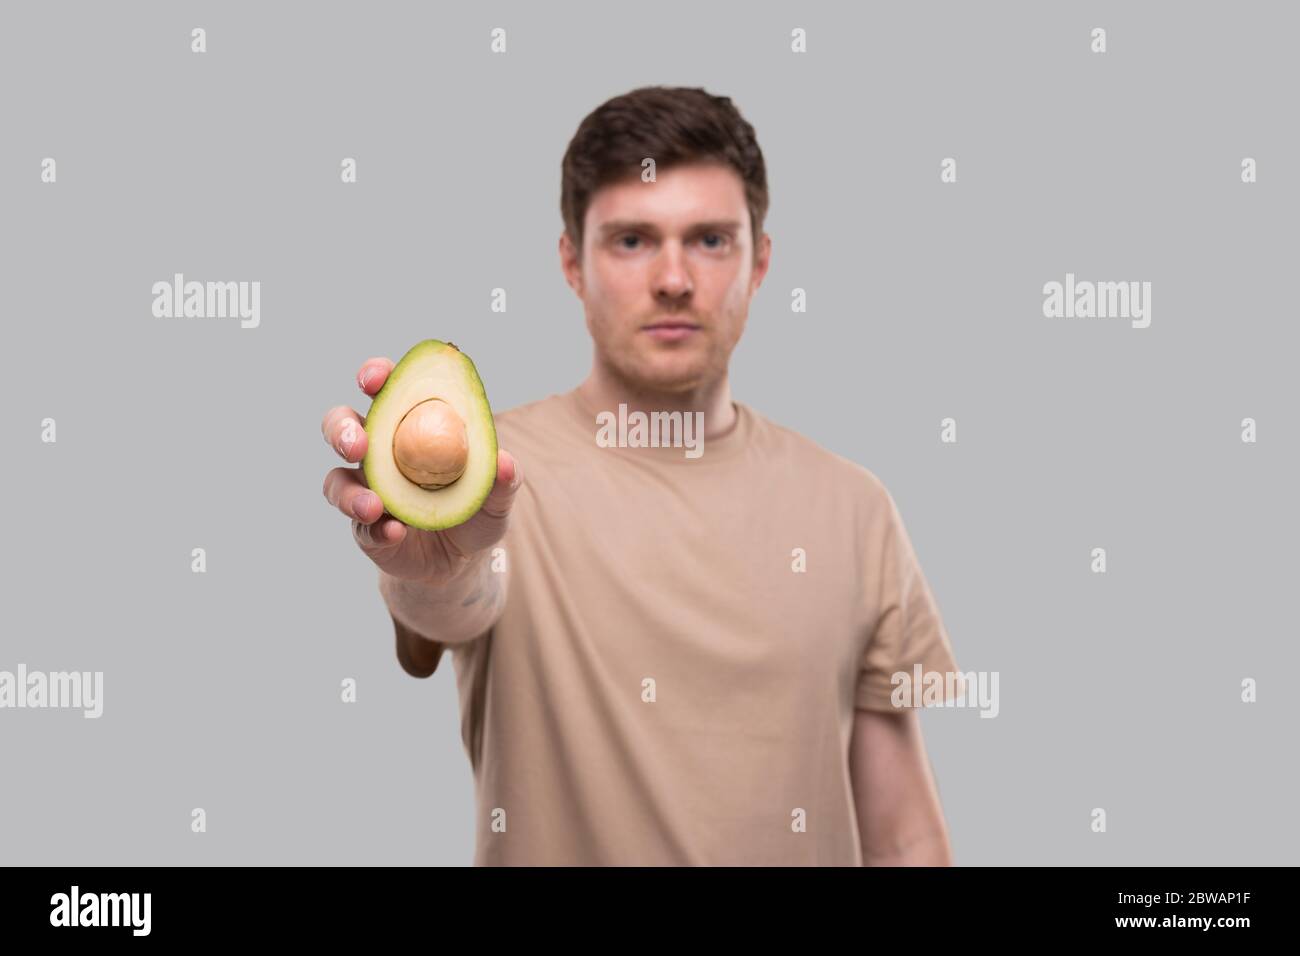 Man Showing Avocado Serious Face Isolated. Avocado Cut in Half. Healthy Food, No Avocado, Stop Avocado Concept Stock Photo